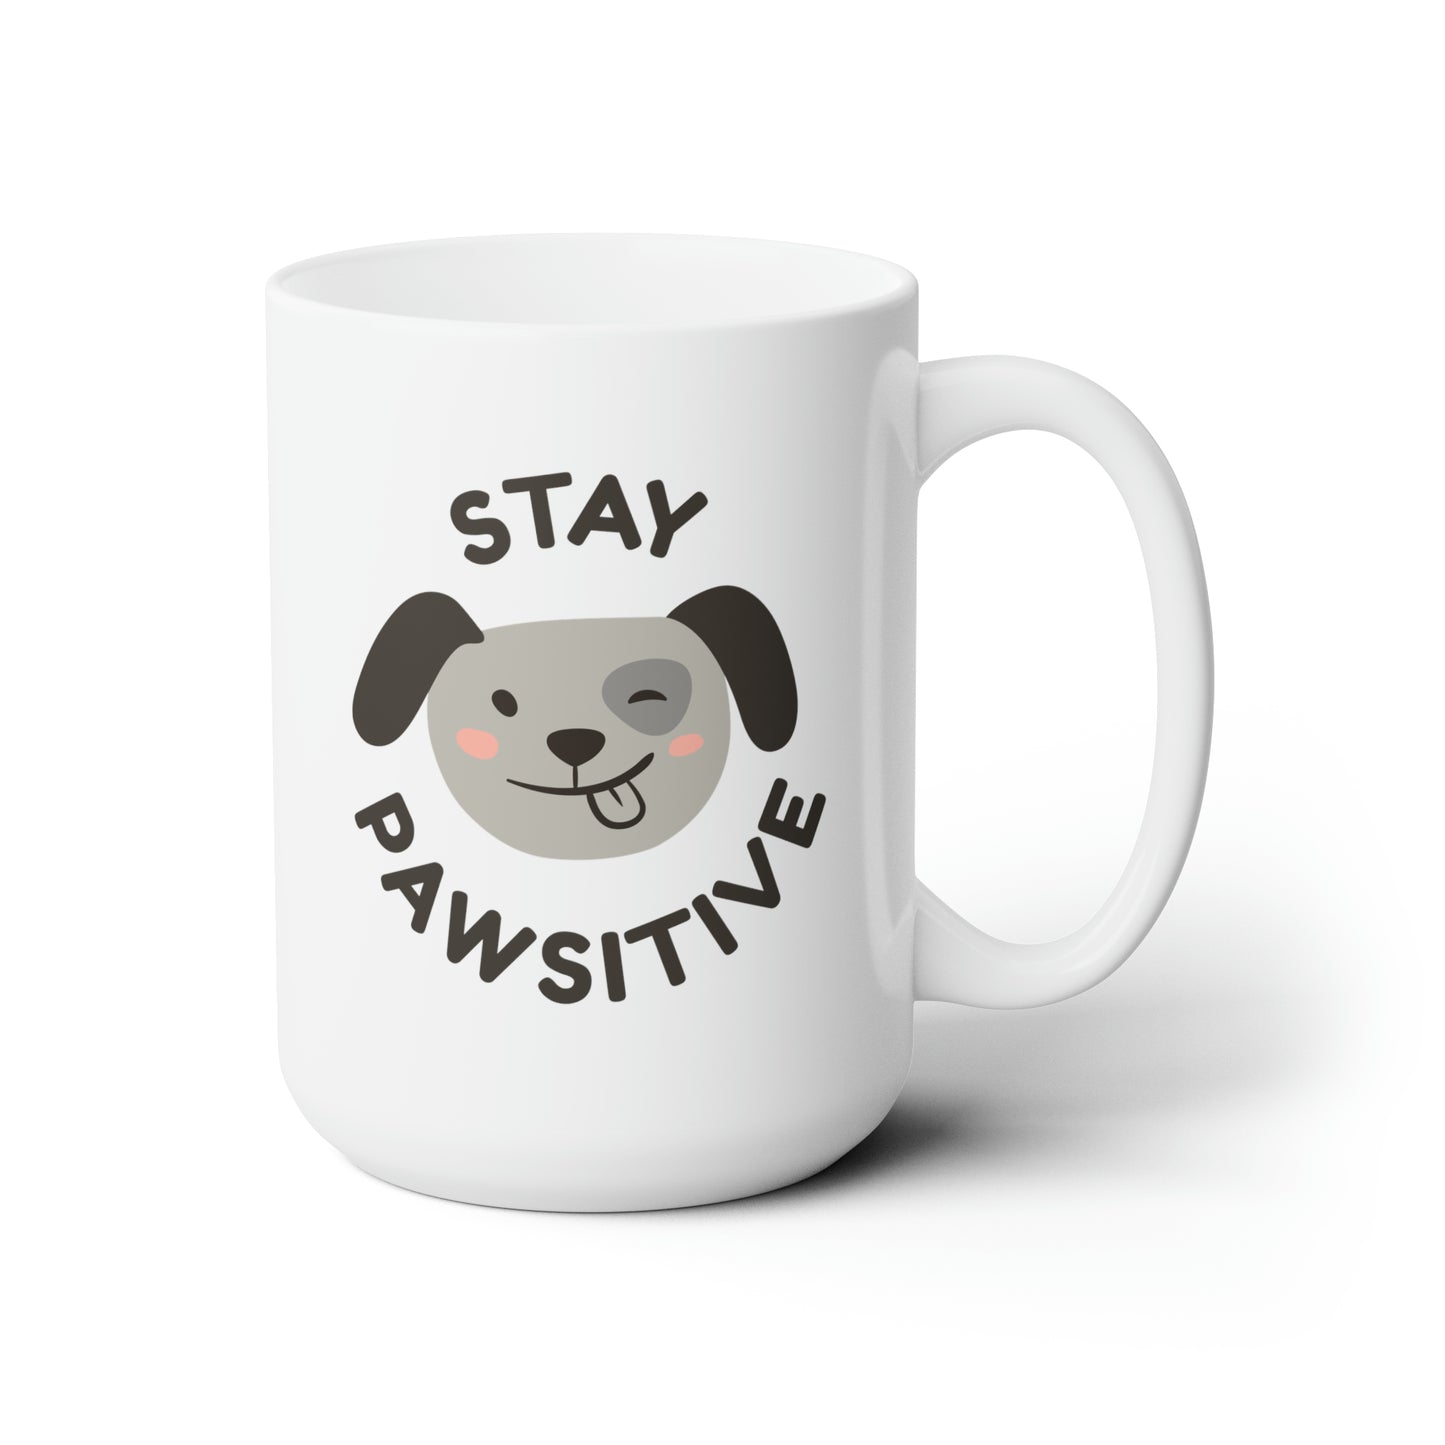 "Stay Pawsitive" Graphic Design Ceramic Mug 15oz